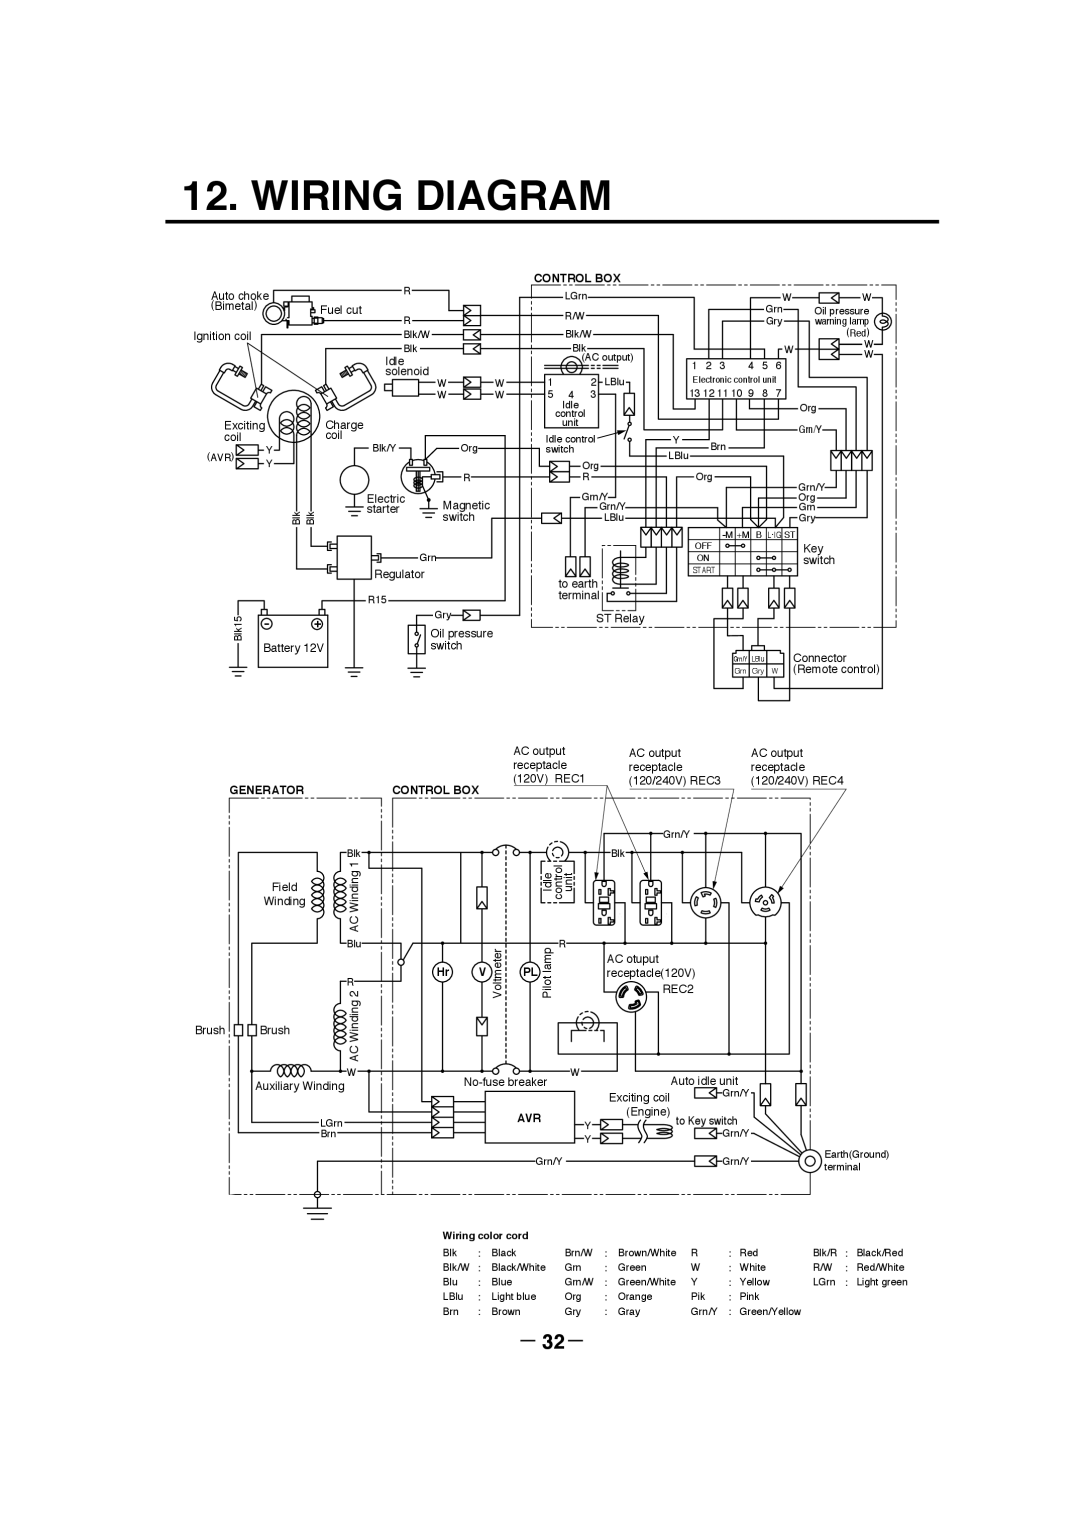 Makita G12010R manual Wiring Diagram, Control Box, Generator, Wiring color cord 